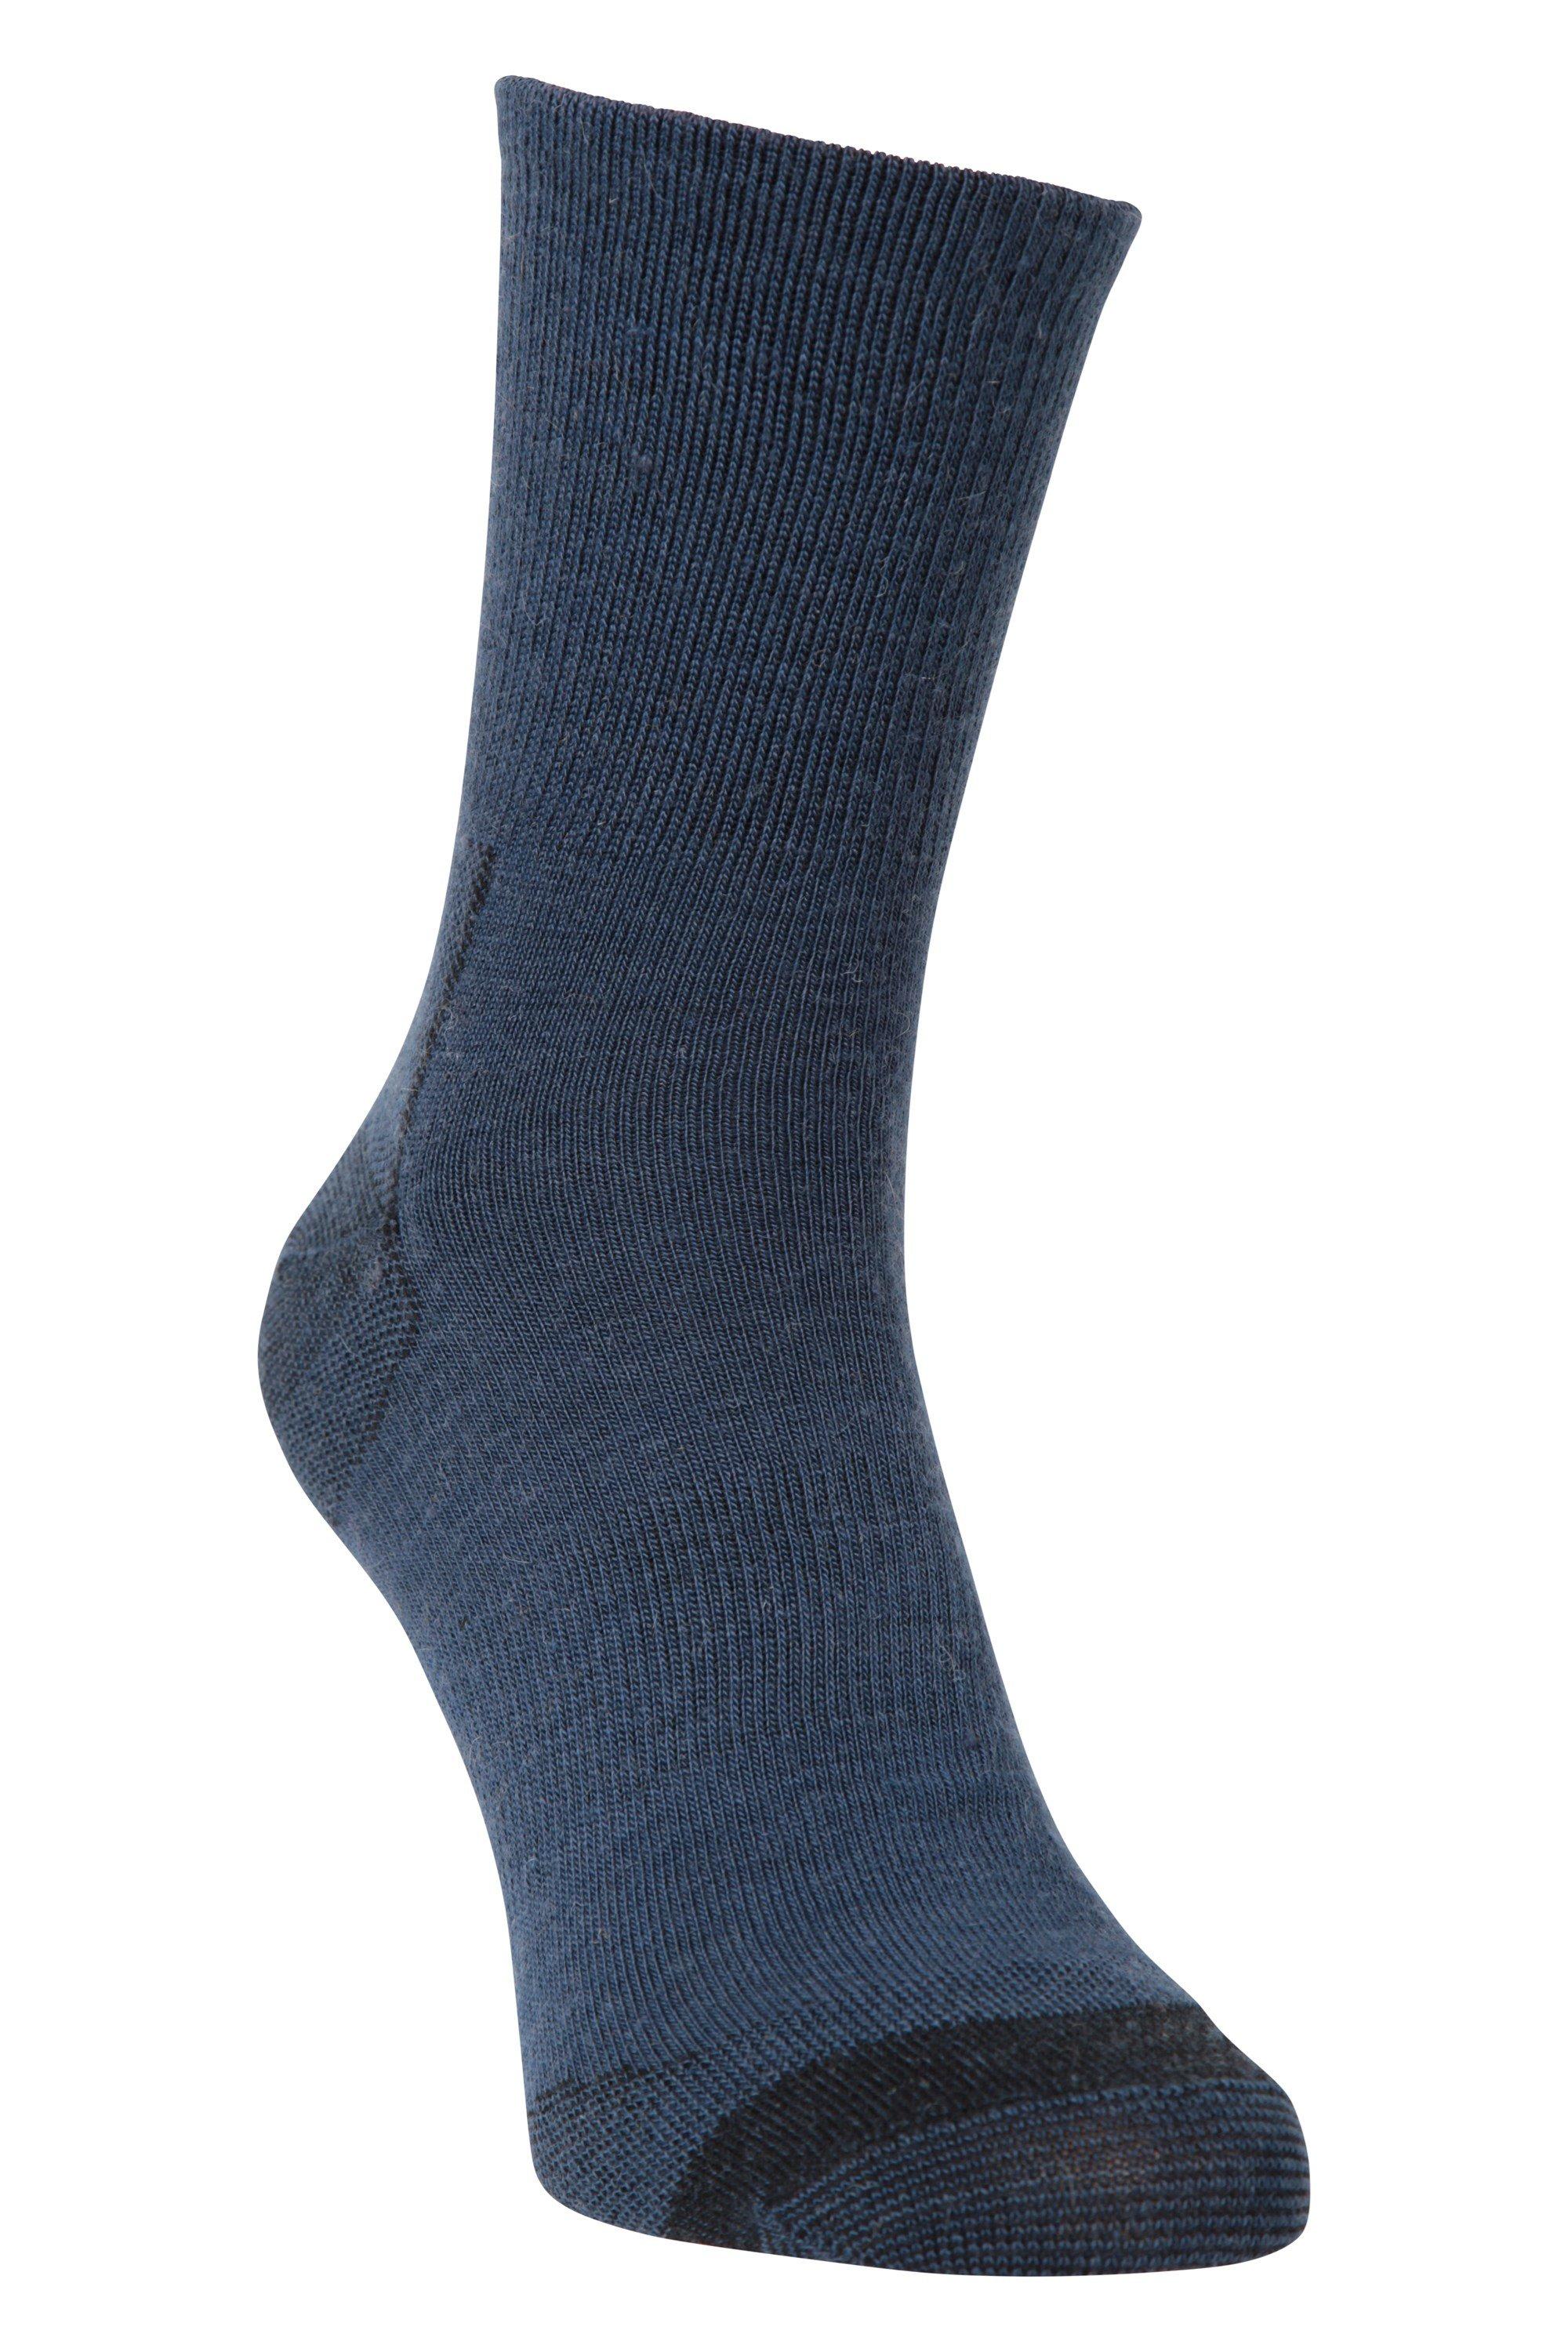 Mid Calf Socks Breathable Soft Merino Anti Chafe Sock